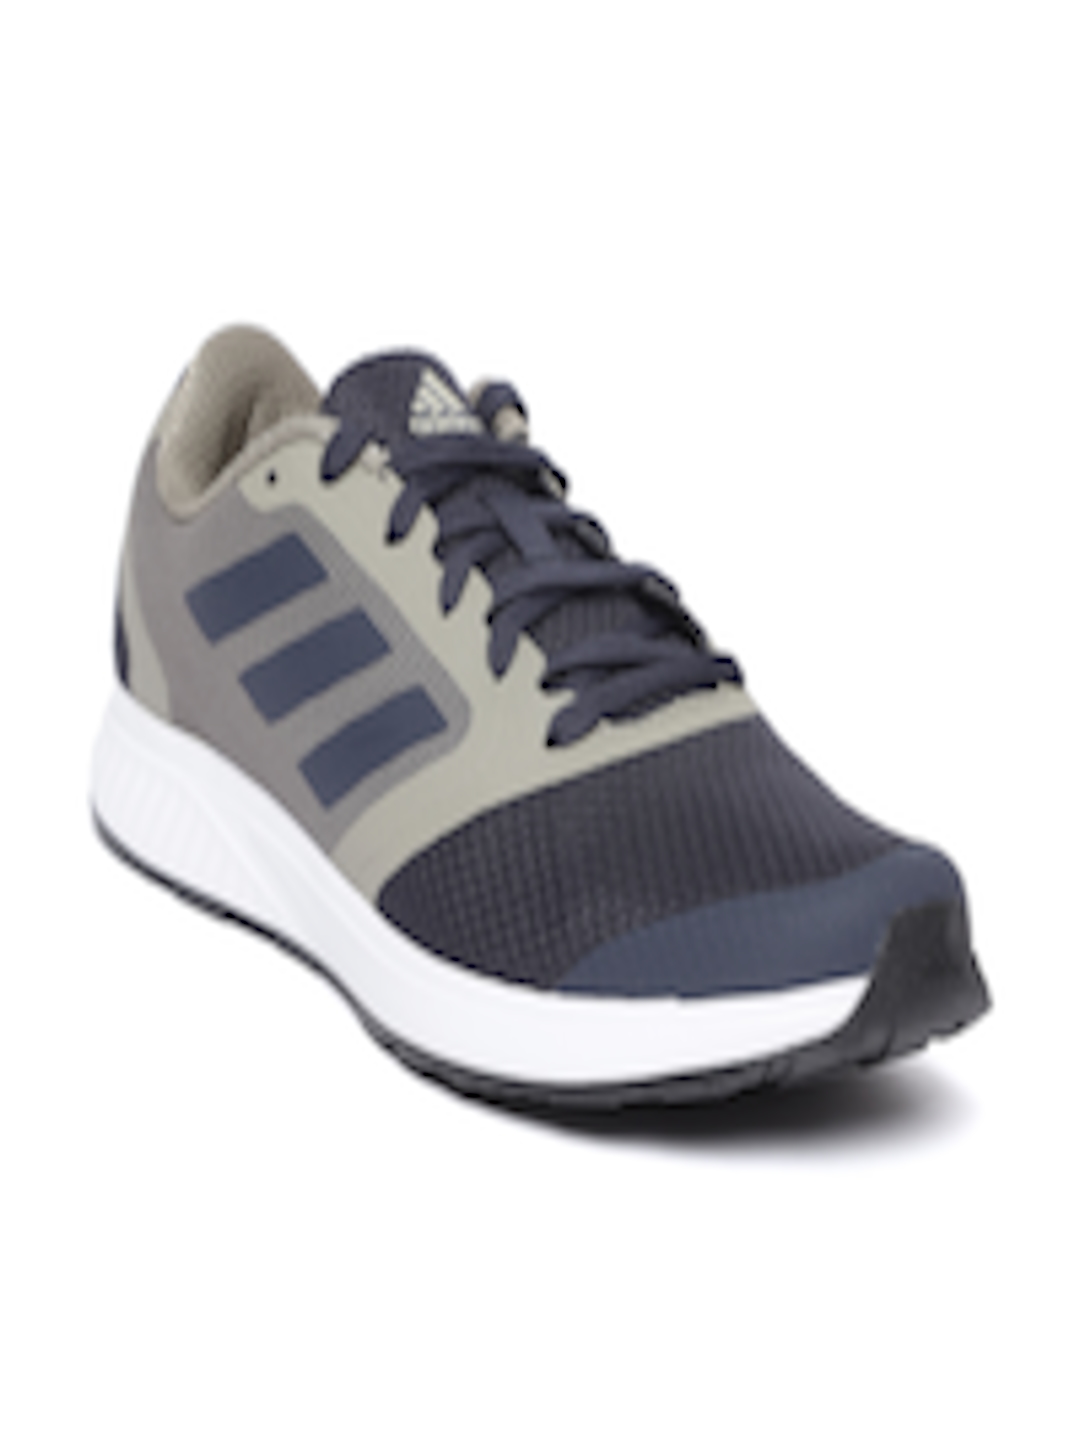 Buy ADIDAS Men Navy Blue & Beige ADISTARK 2 Running Shoes - Sports ...